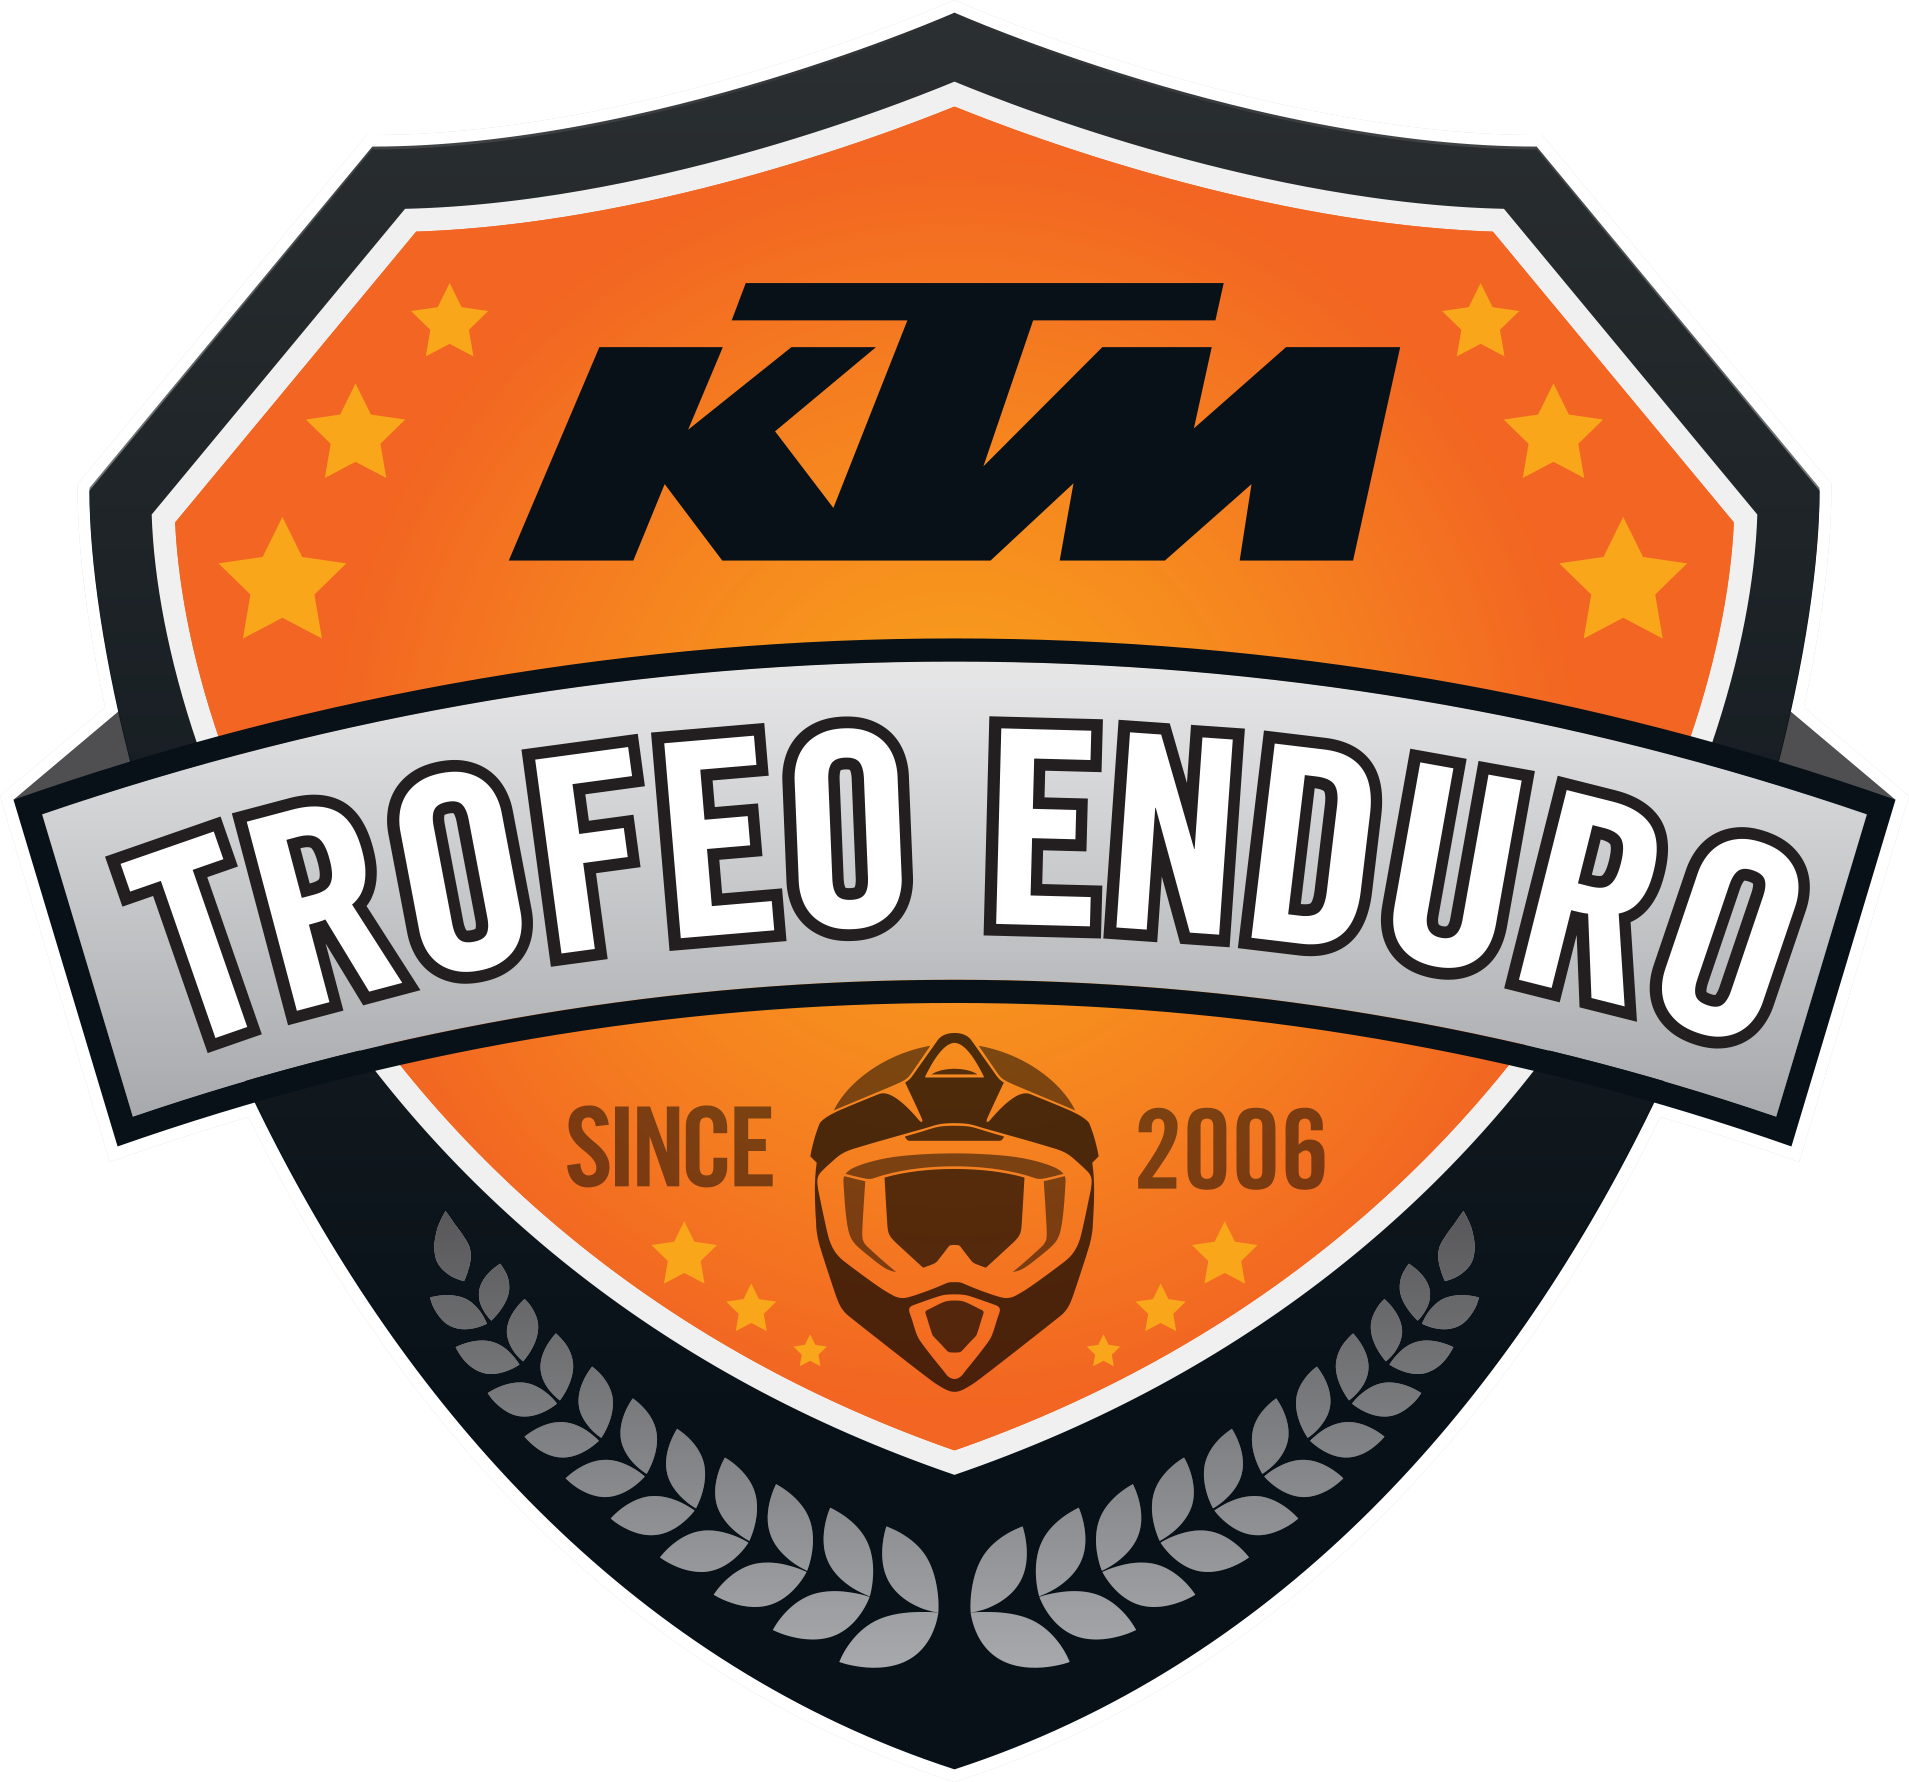 ktm-trofeo-enduro-logo-since-2006